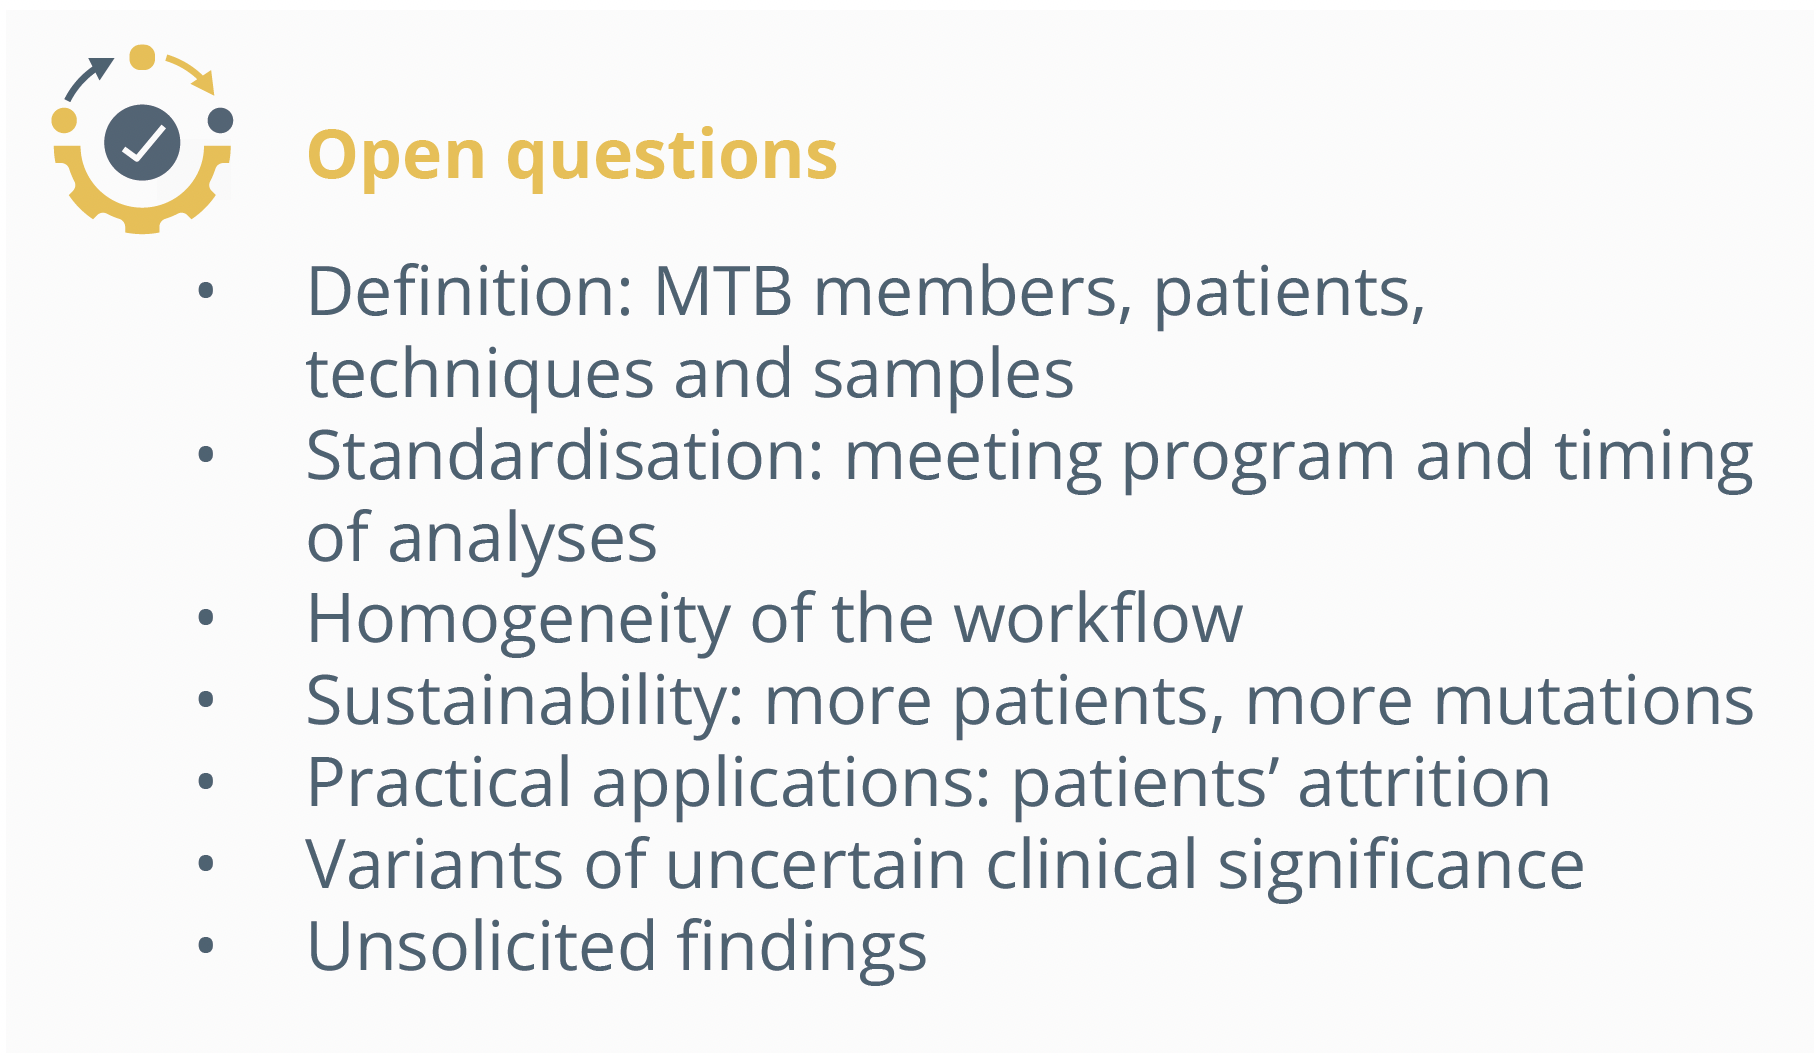 Open questions regarding MTBs such as their exact definition, standardisation